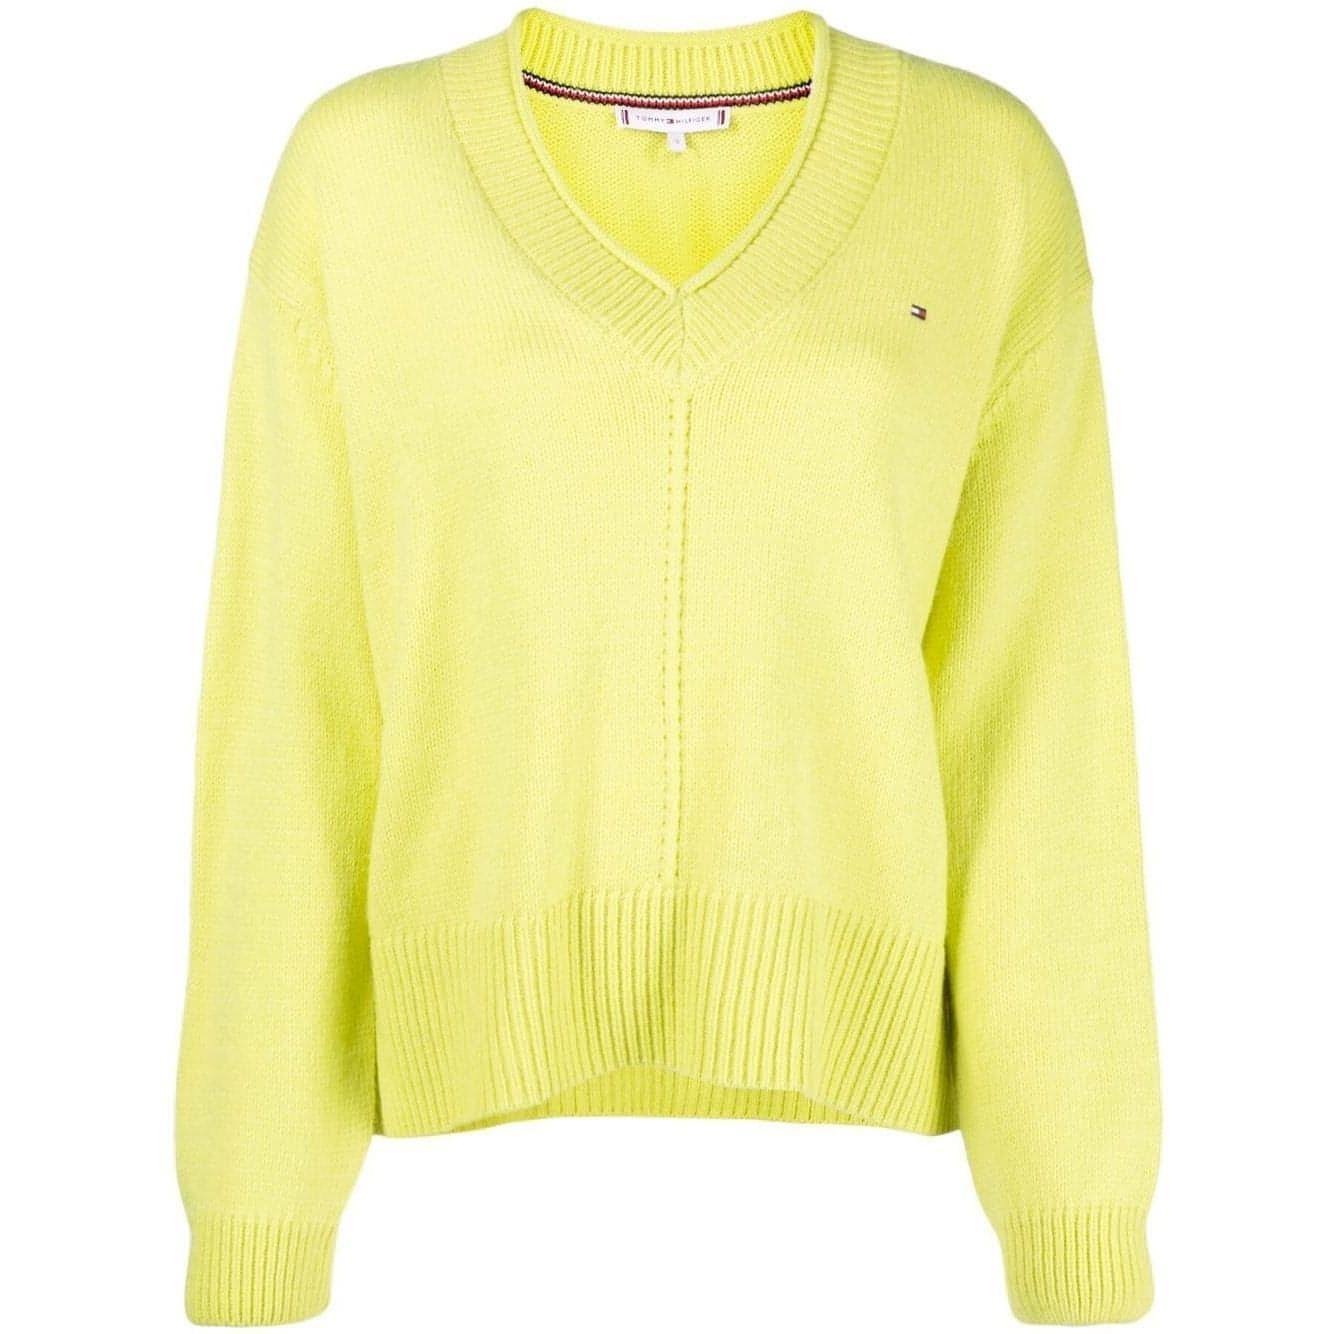 TOMMY HILFIGER moteriškas geltonas megztinis